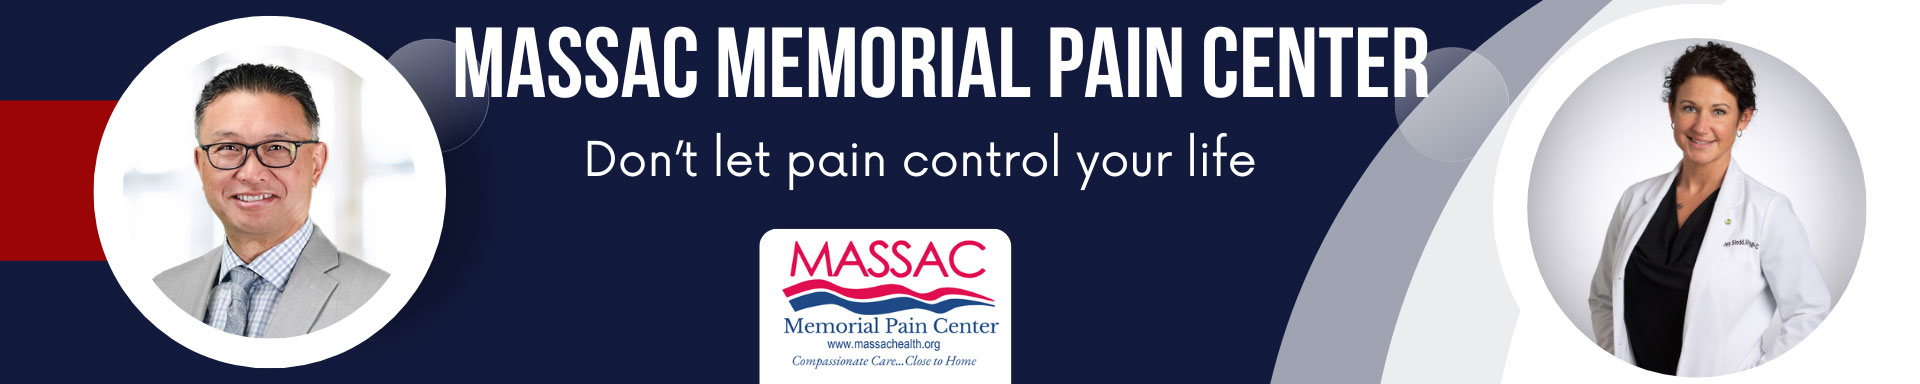 Massac Memorial Pain Center

Don't let pain control your life.